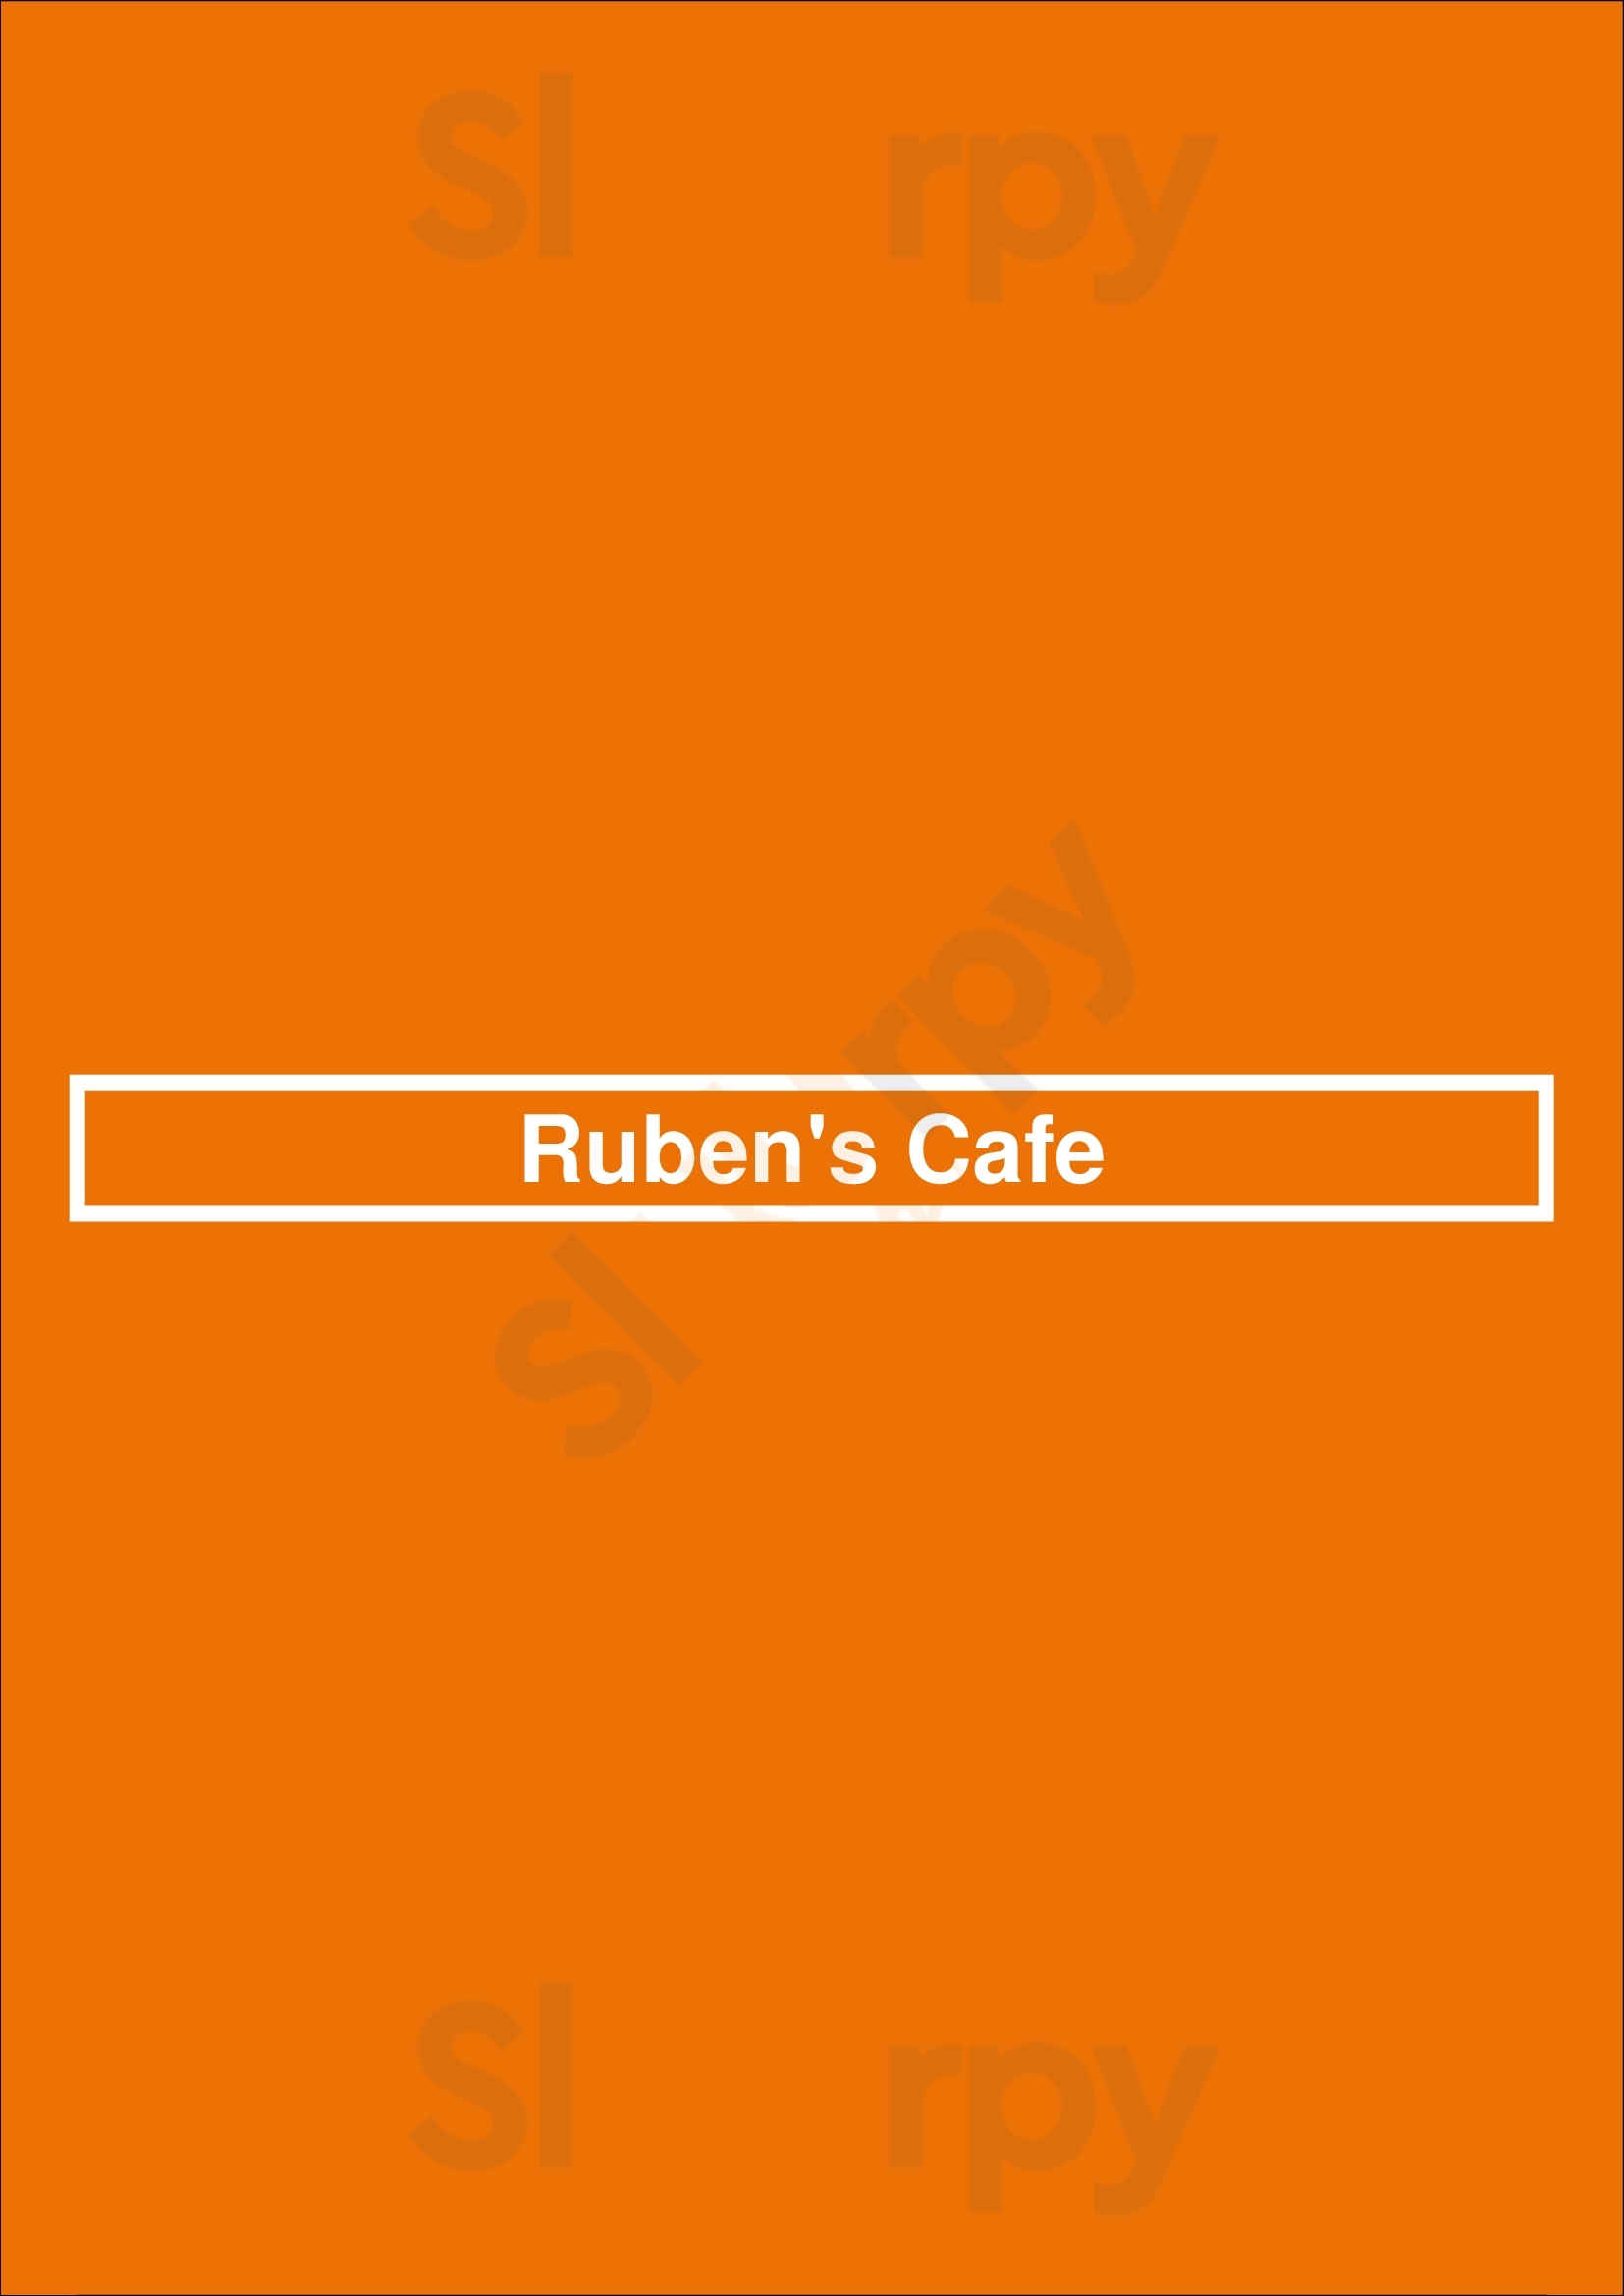 Ruben's Cafe San Juan Menu - 1